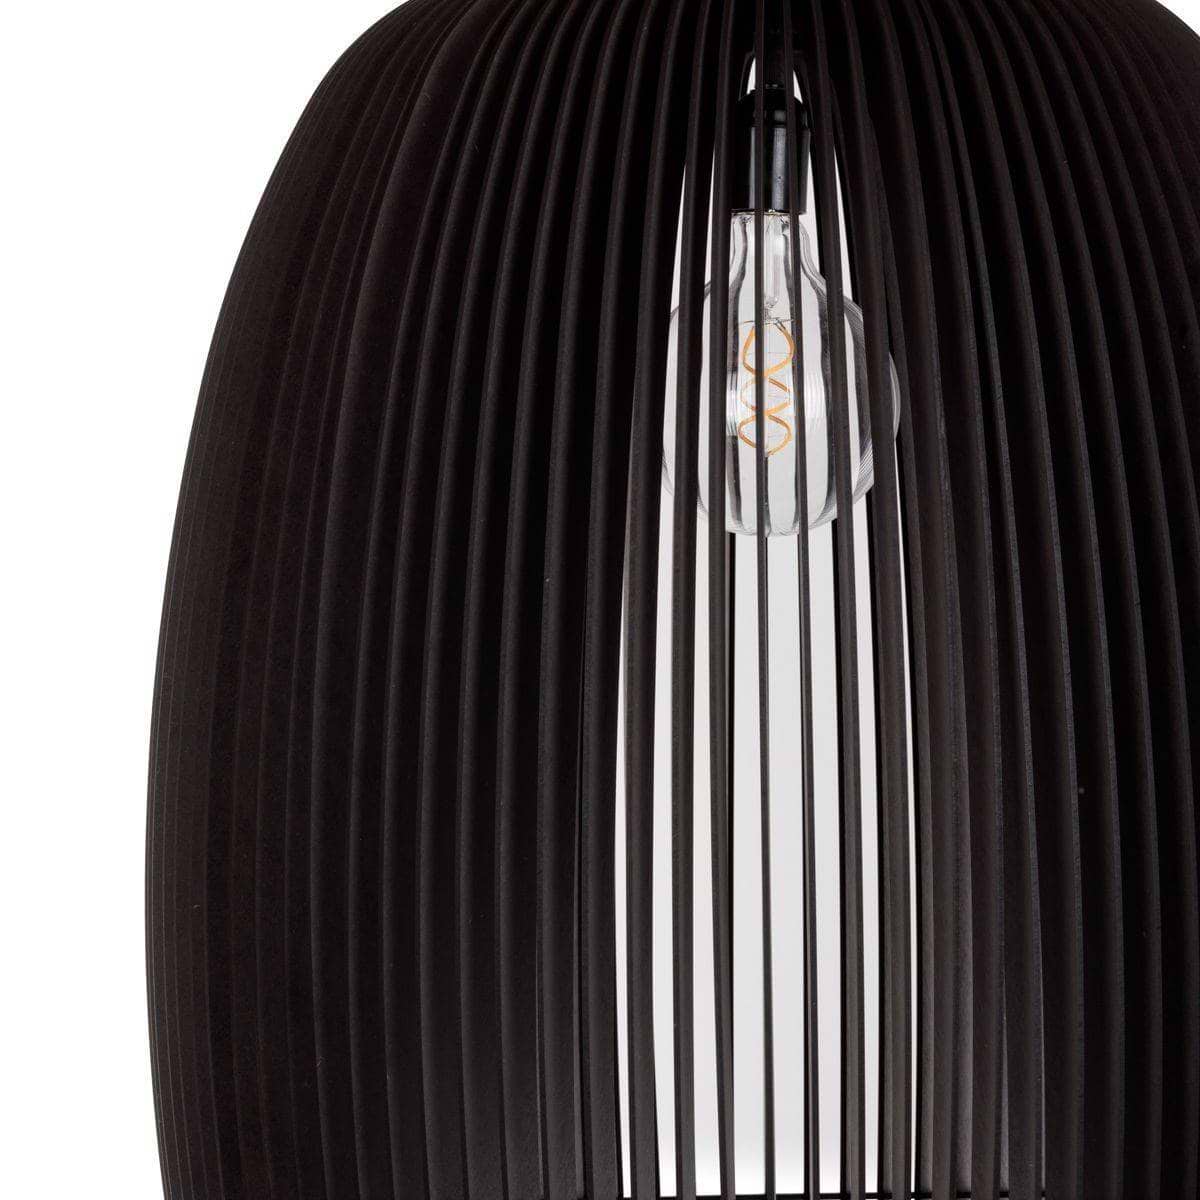 palm Plotselinge afdaling levering Webo Verlichting - lampen showroom & lampen online - Nederlands grootste  verlichtingsshowroom